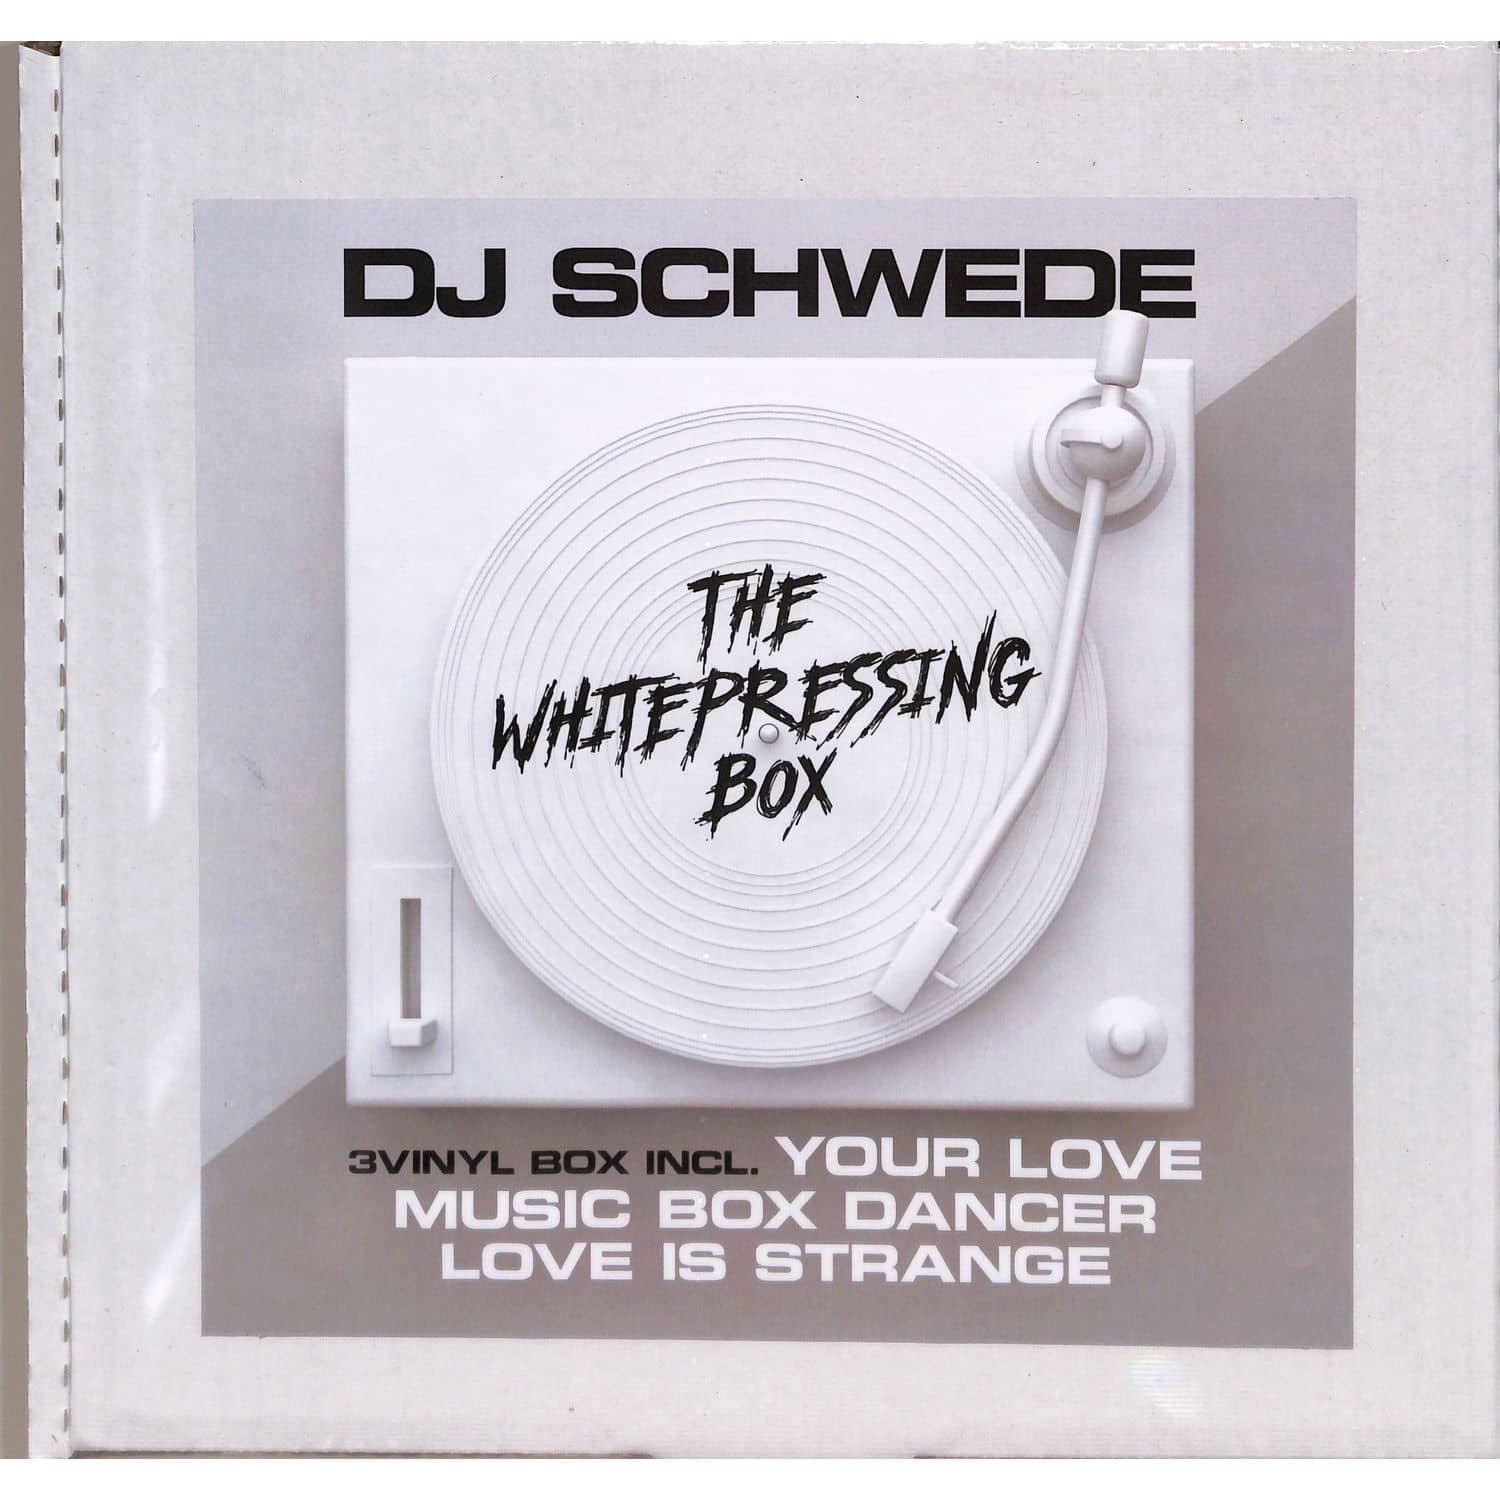 DJ Schwede - THE WHITEPRESSING BOX 